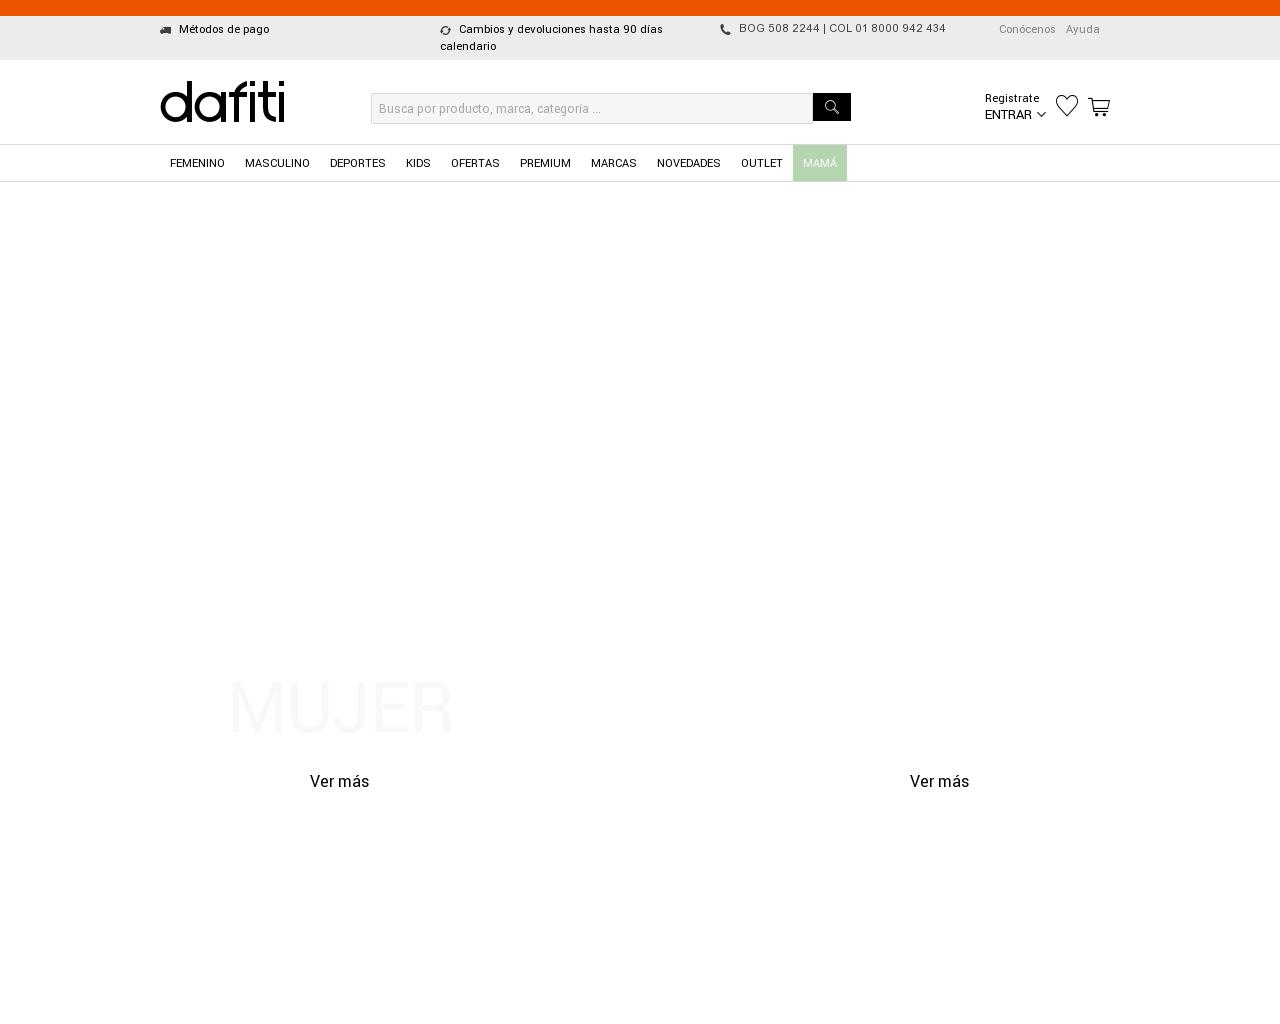 dafiti.com.co